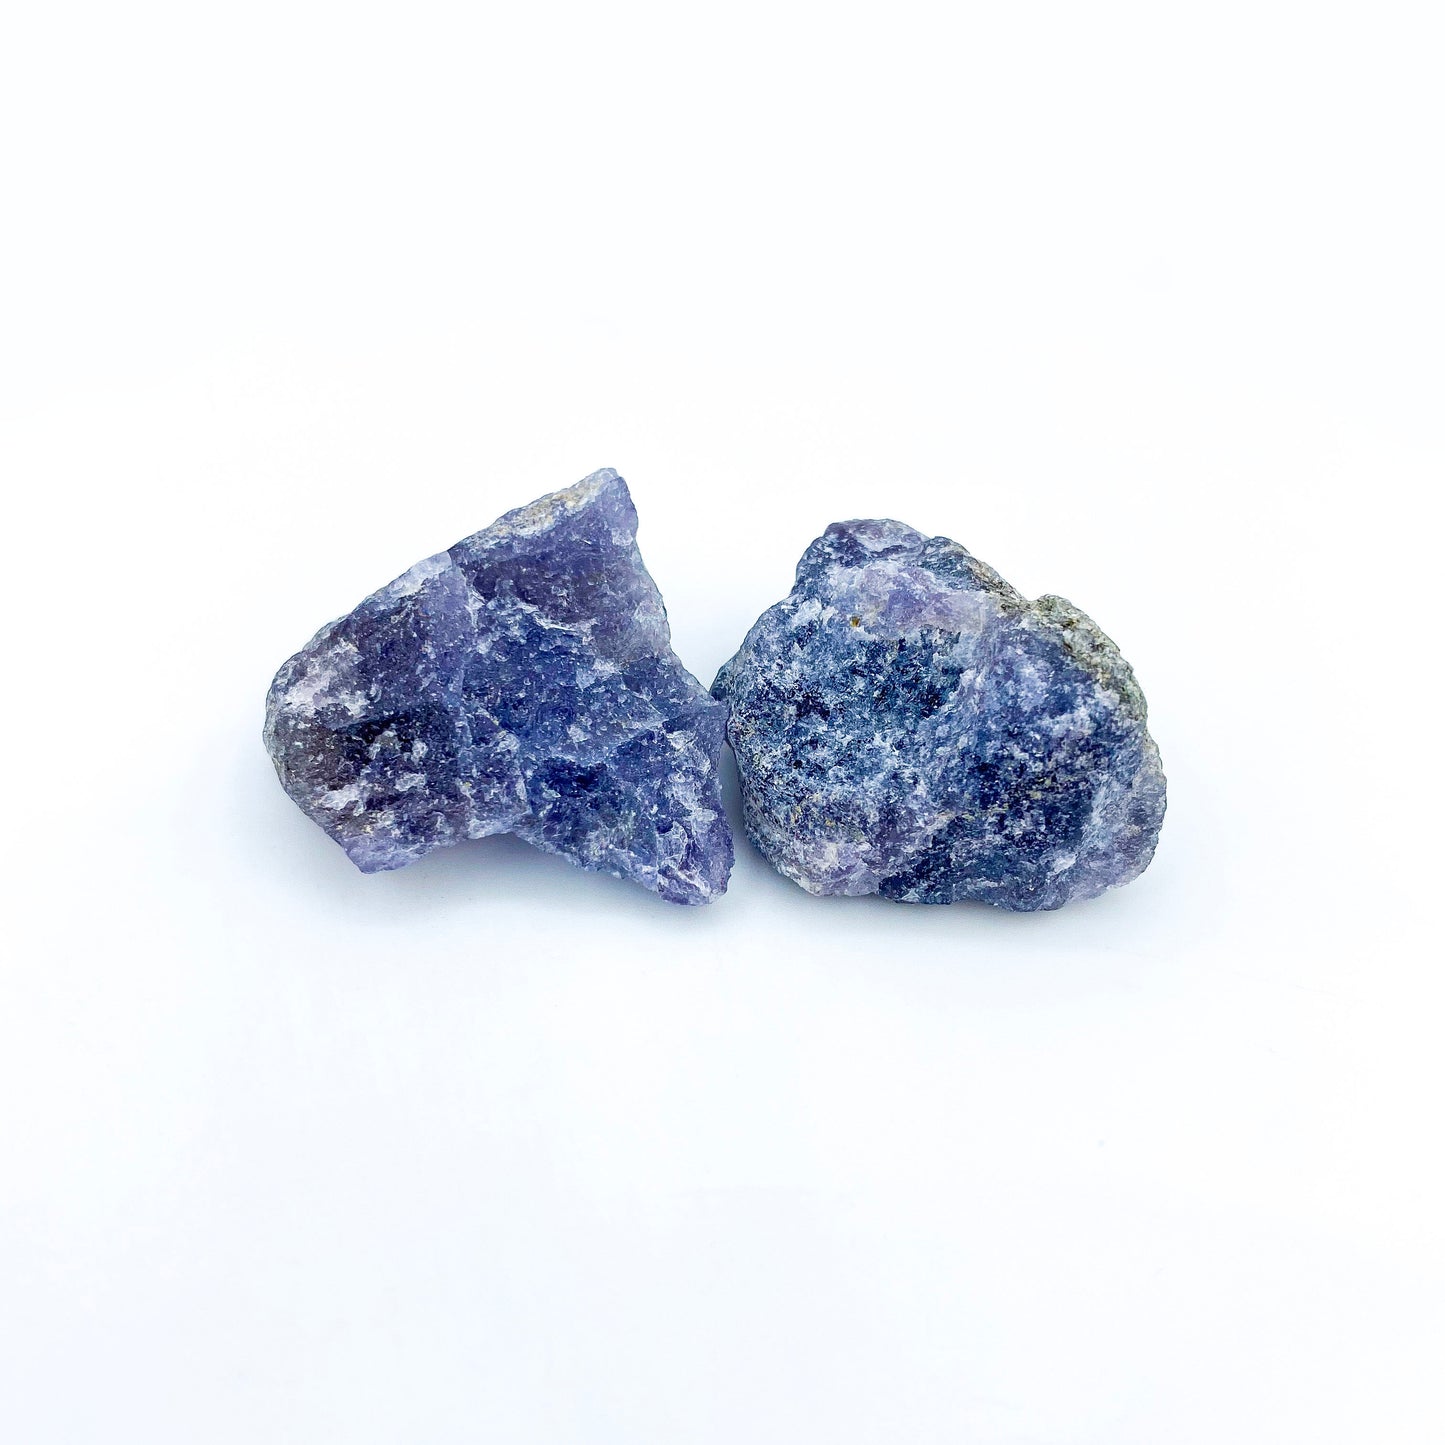 Water Sapphire (Iolite) - Patrick Adair Supplies